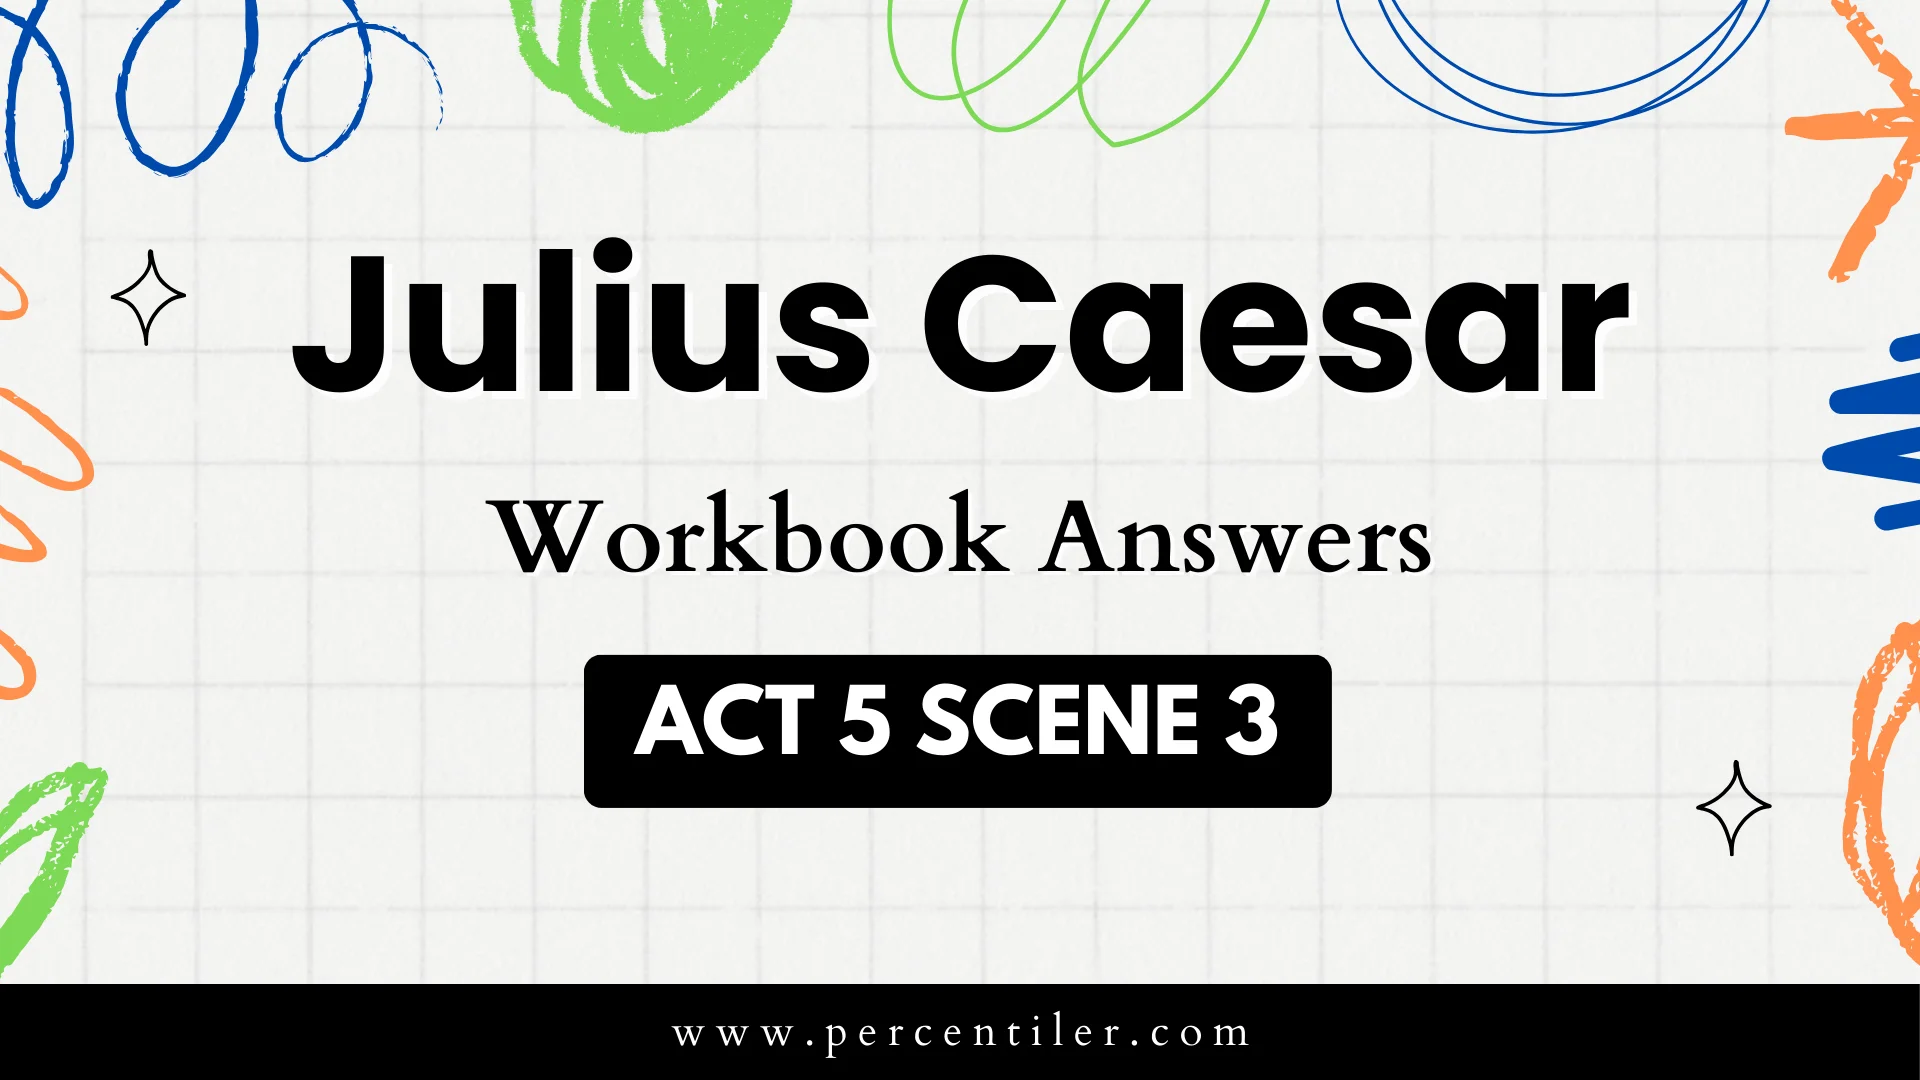 ICSE Julius Caesar Workbook Answer : Act 5 Scene 3